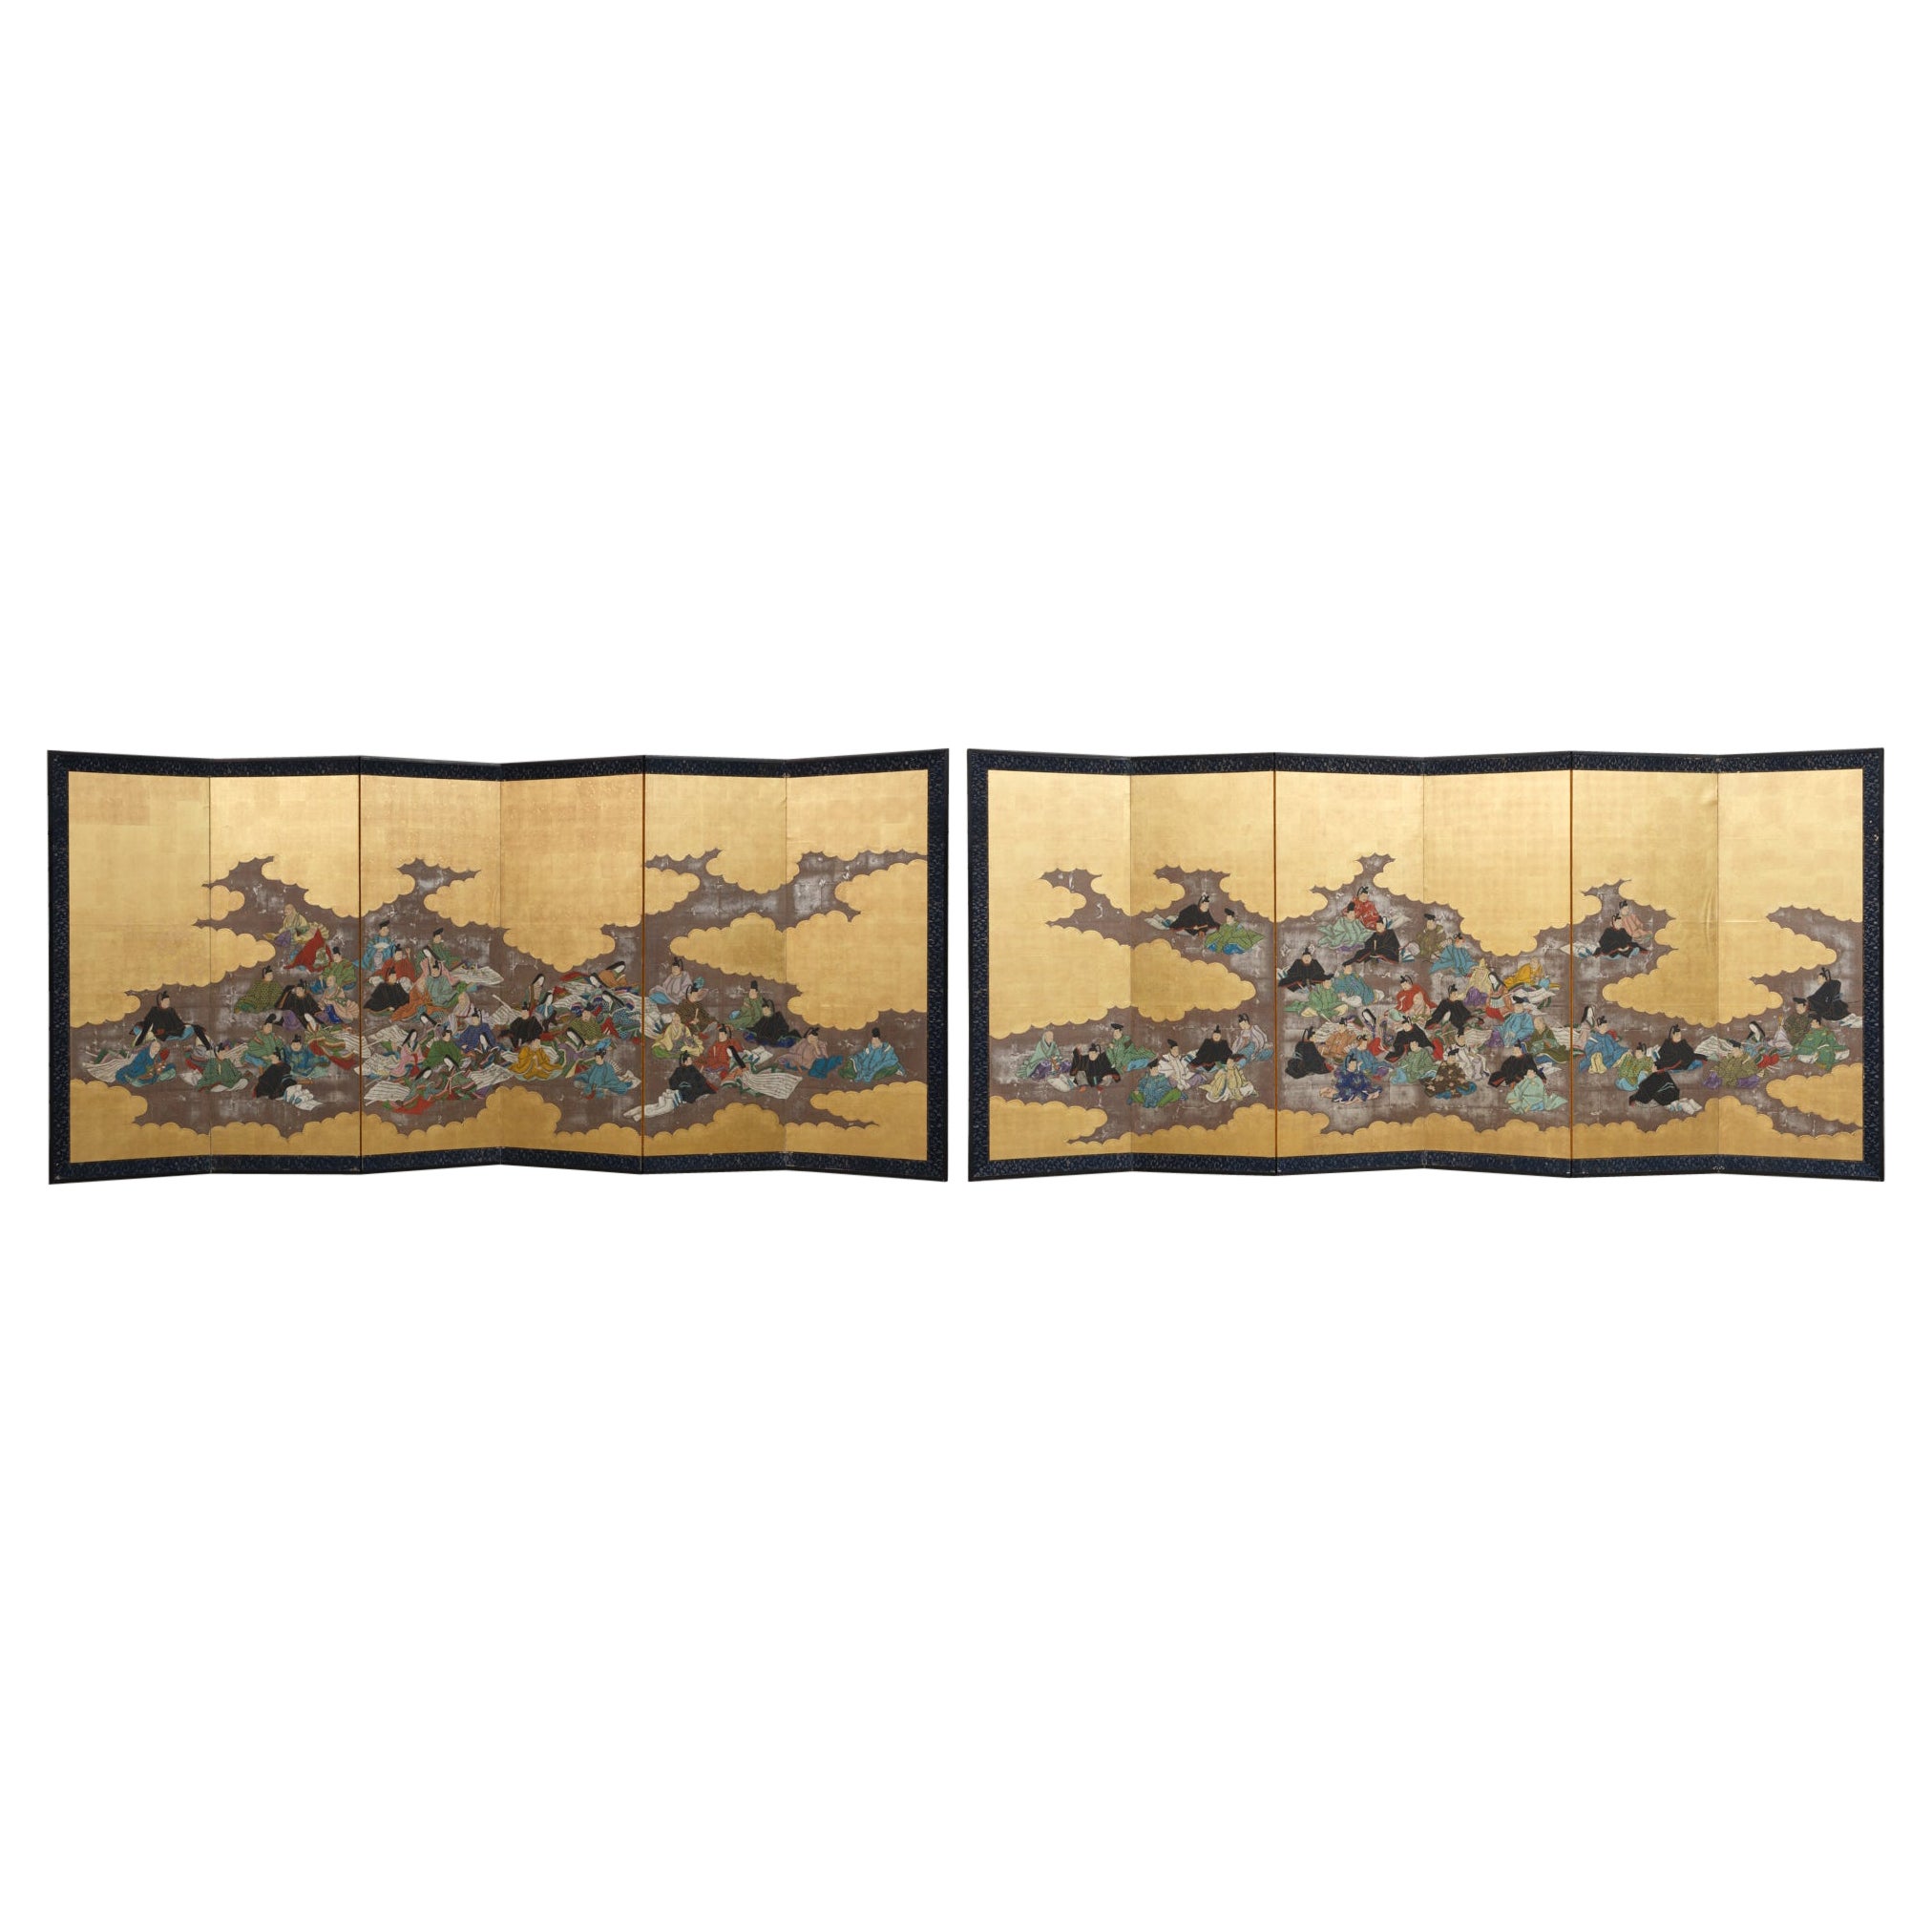 Pair of Japanese folding screens (byôbu) of poets from ��‘Hyakunin isshu’ 百人一首